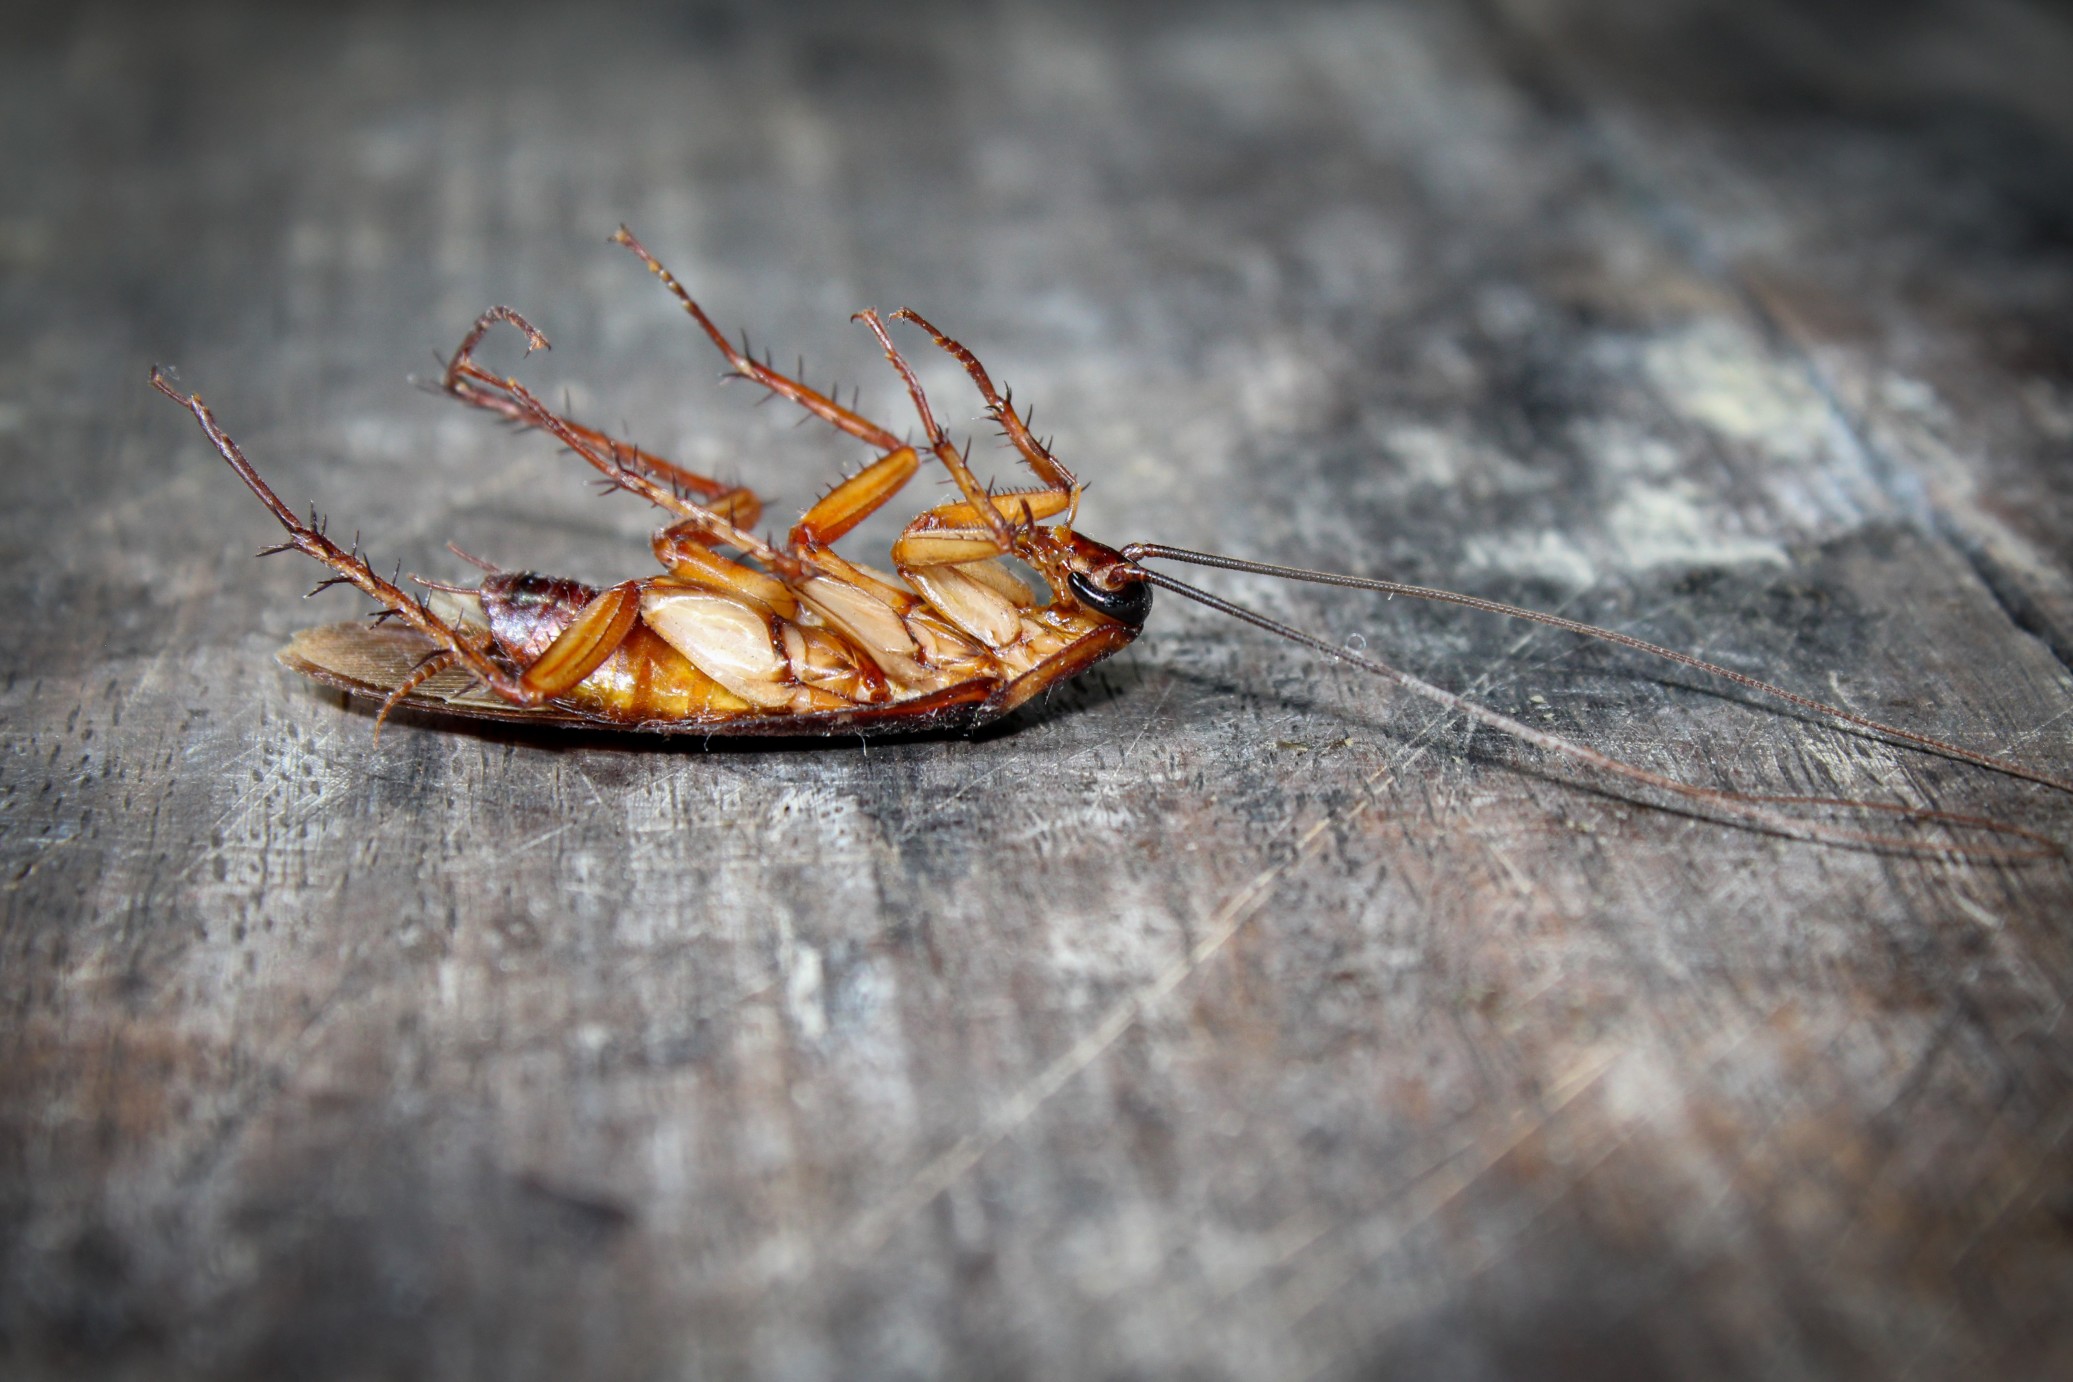 roaches lie dead on the wooden floor